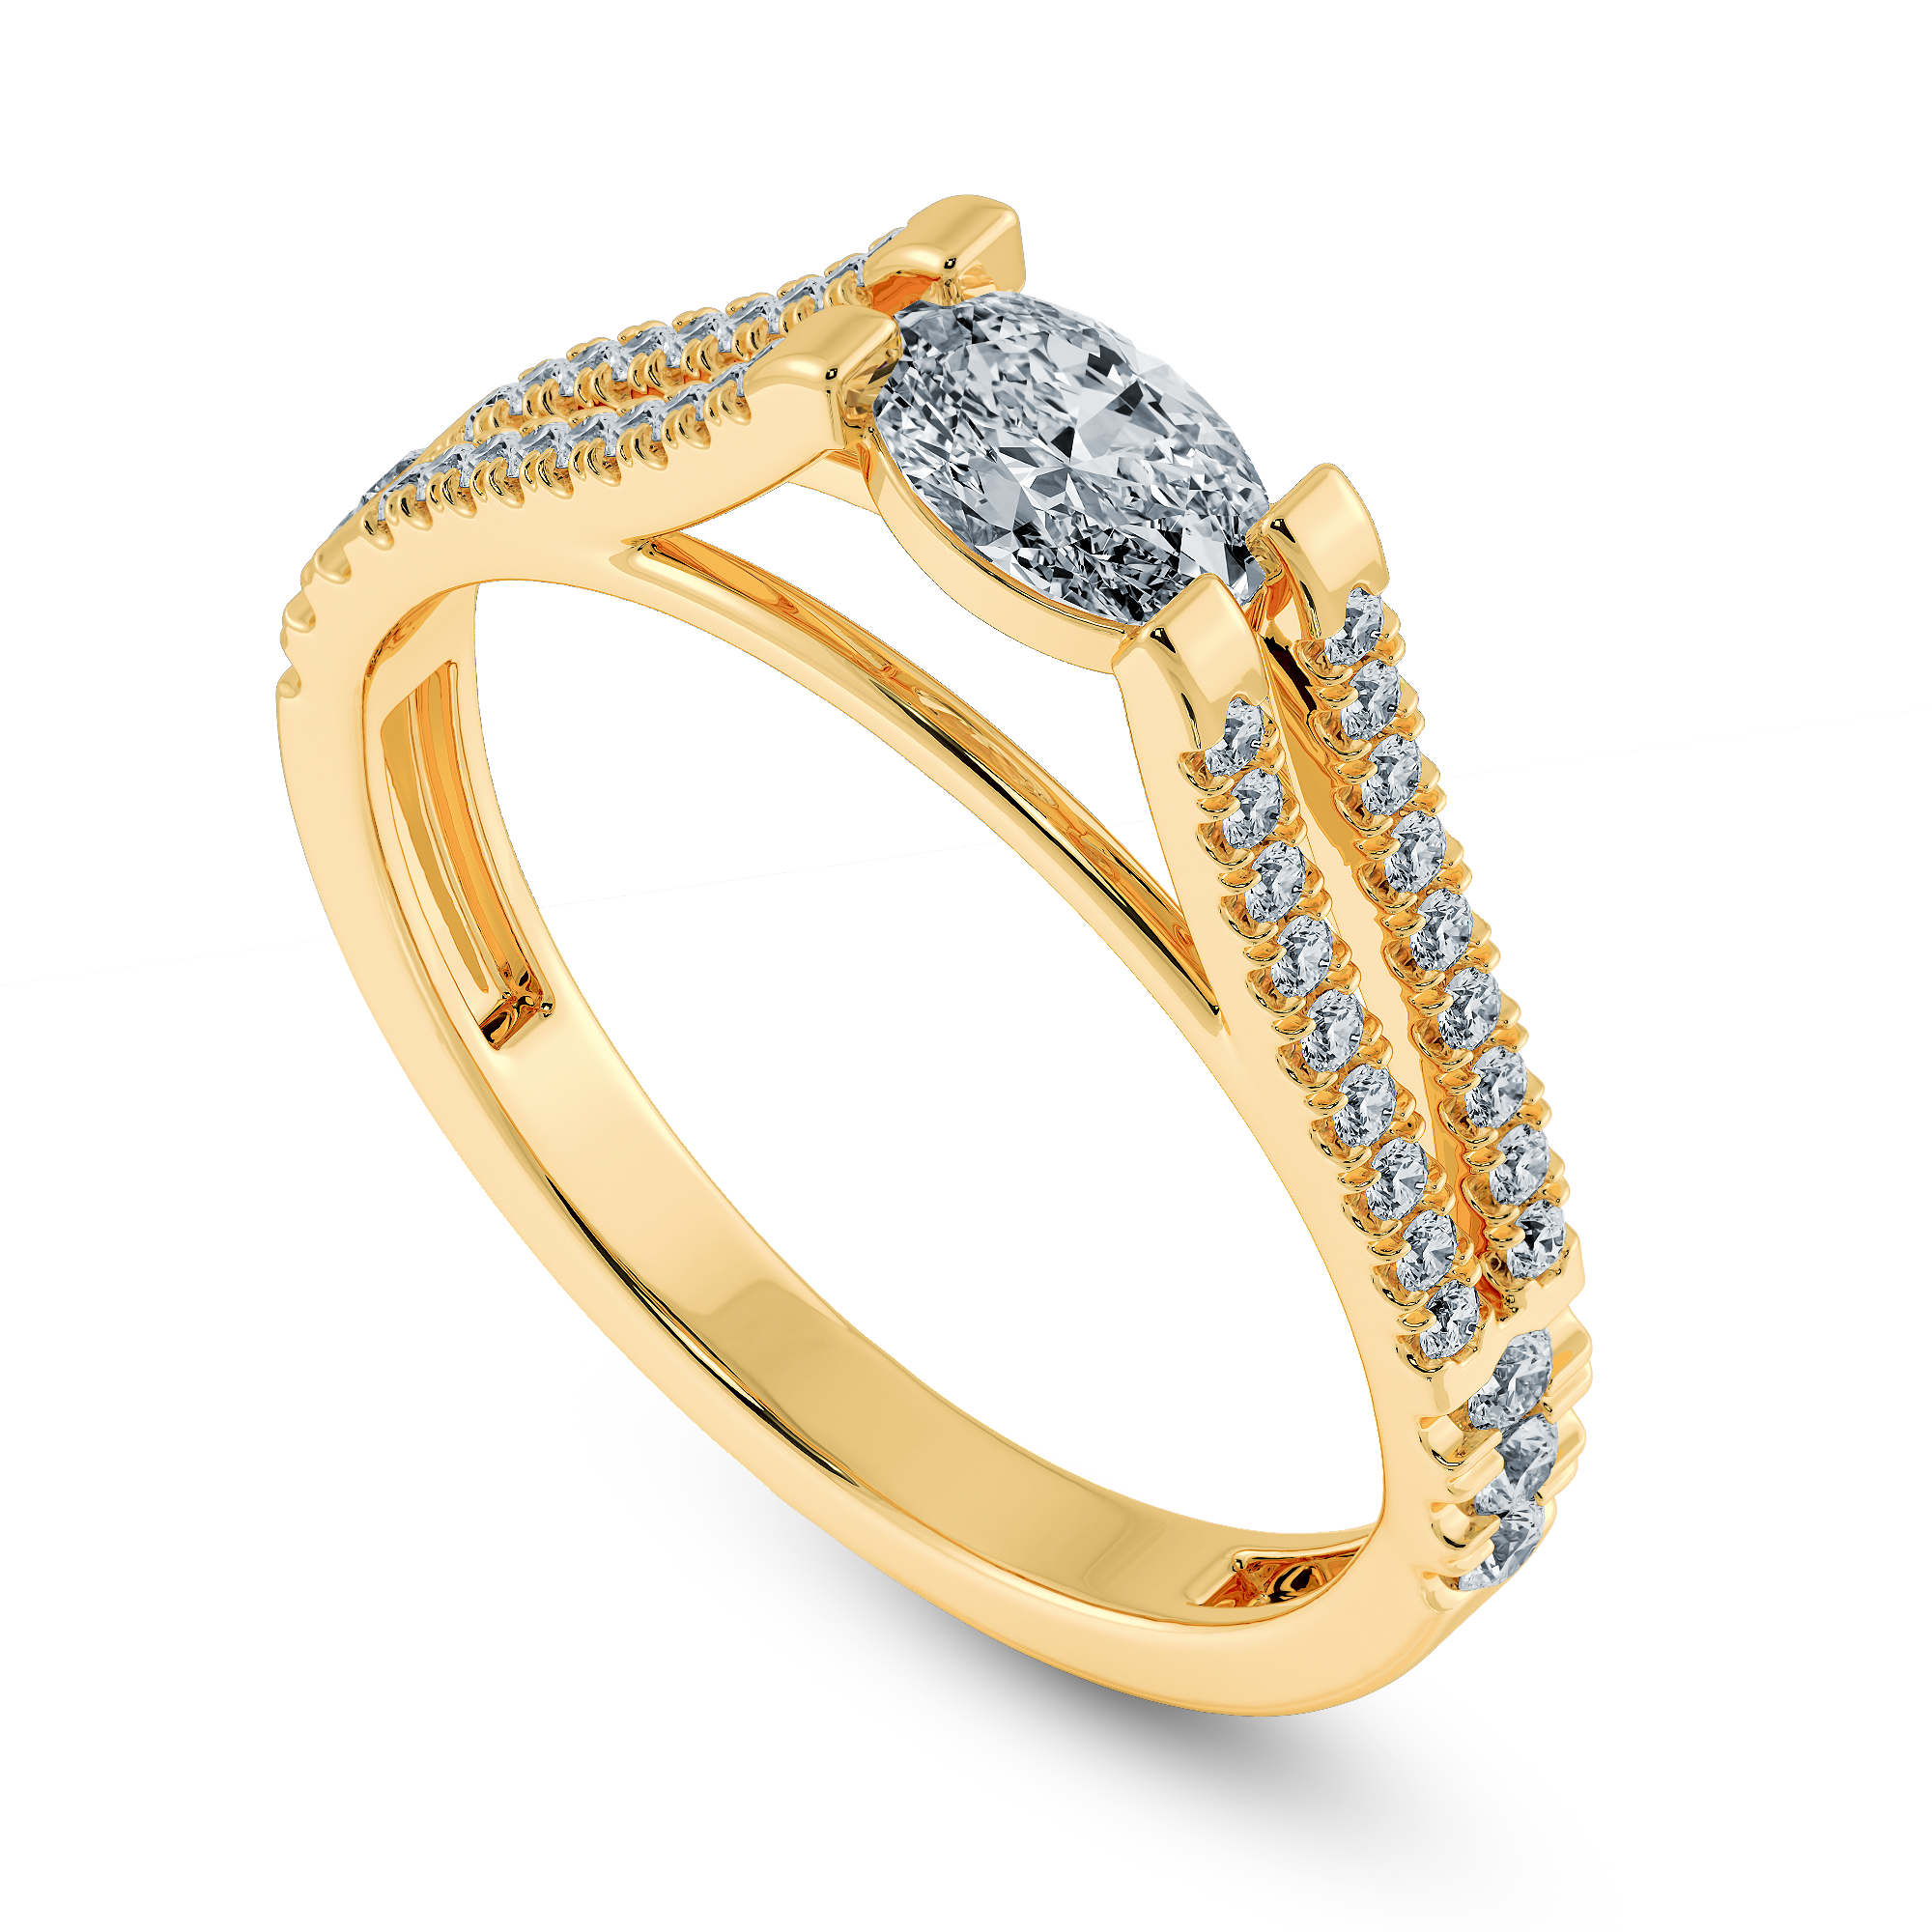 Buy Sapphire Rain 22K & Diamond Ring at Nancy Troske Jewelry for only  $4,500.00